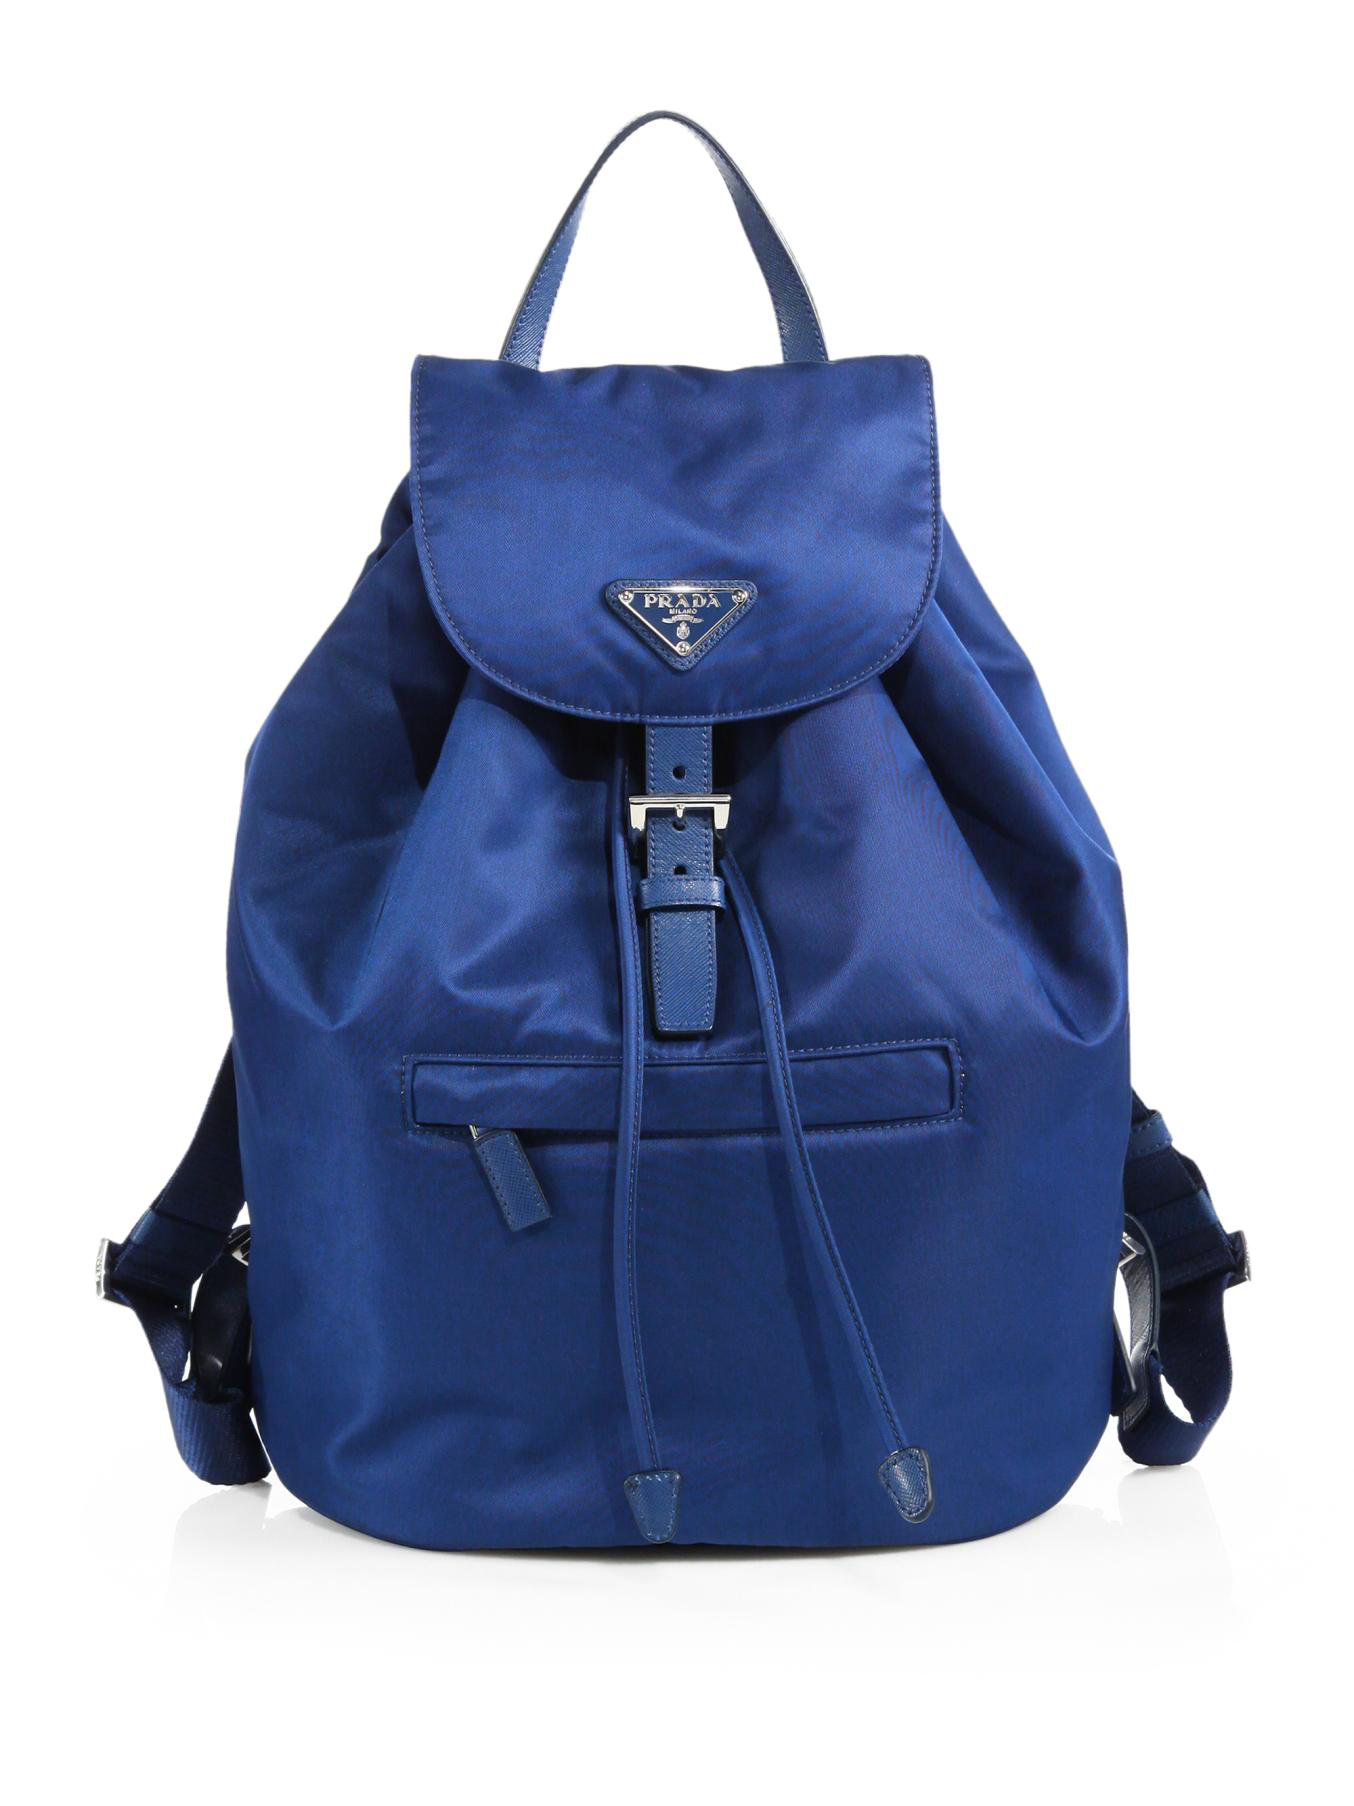 Prada Vela Backpack in Blue (royal blue) | Lyst  